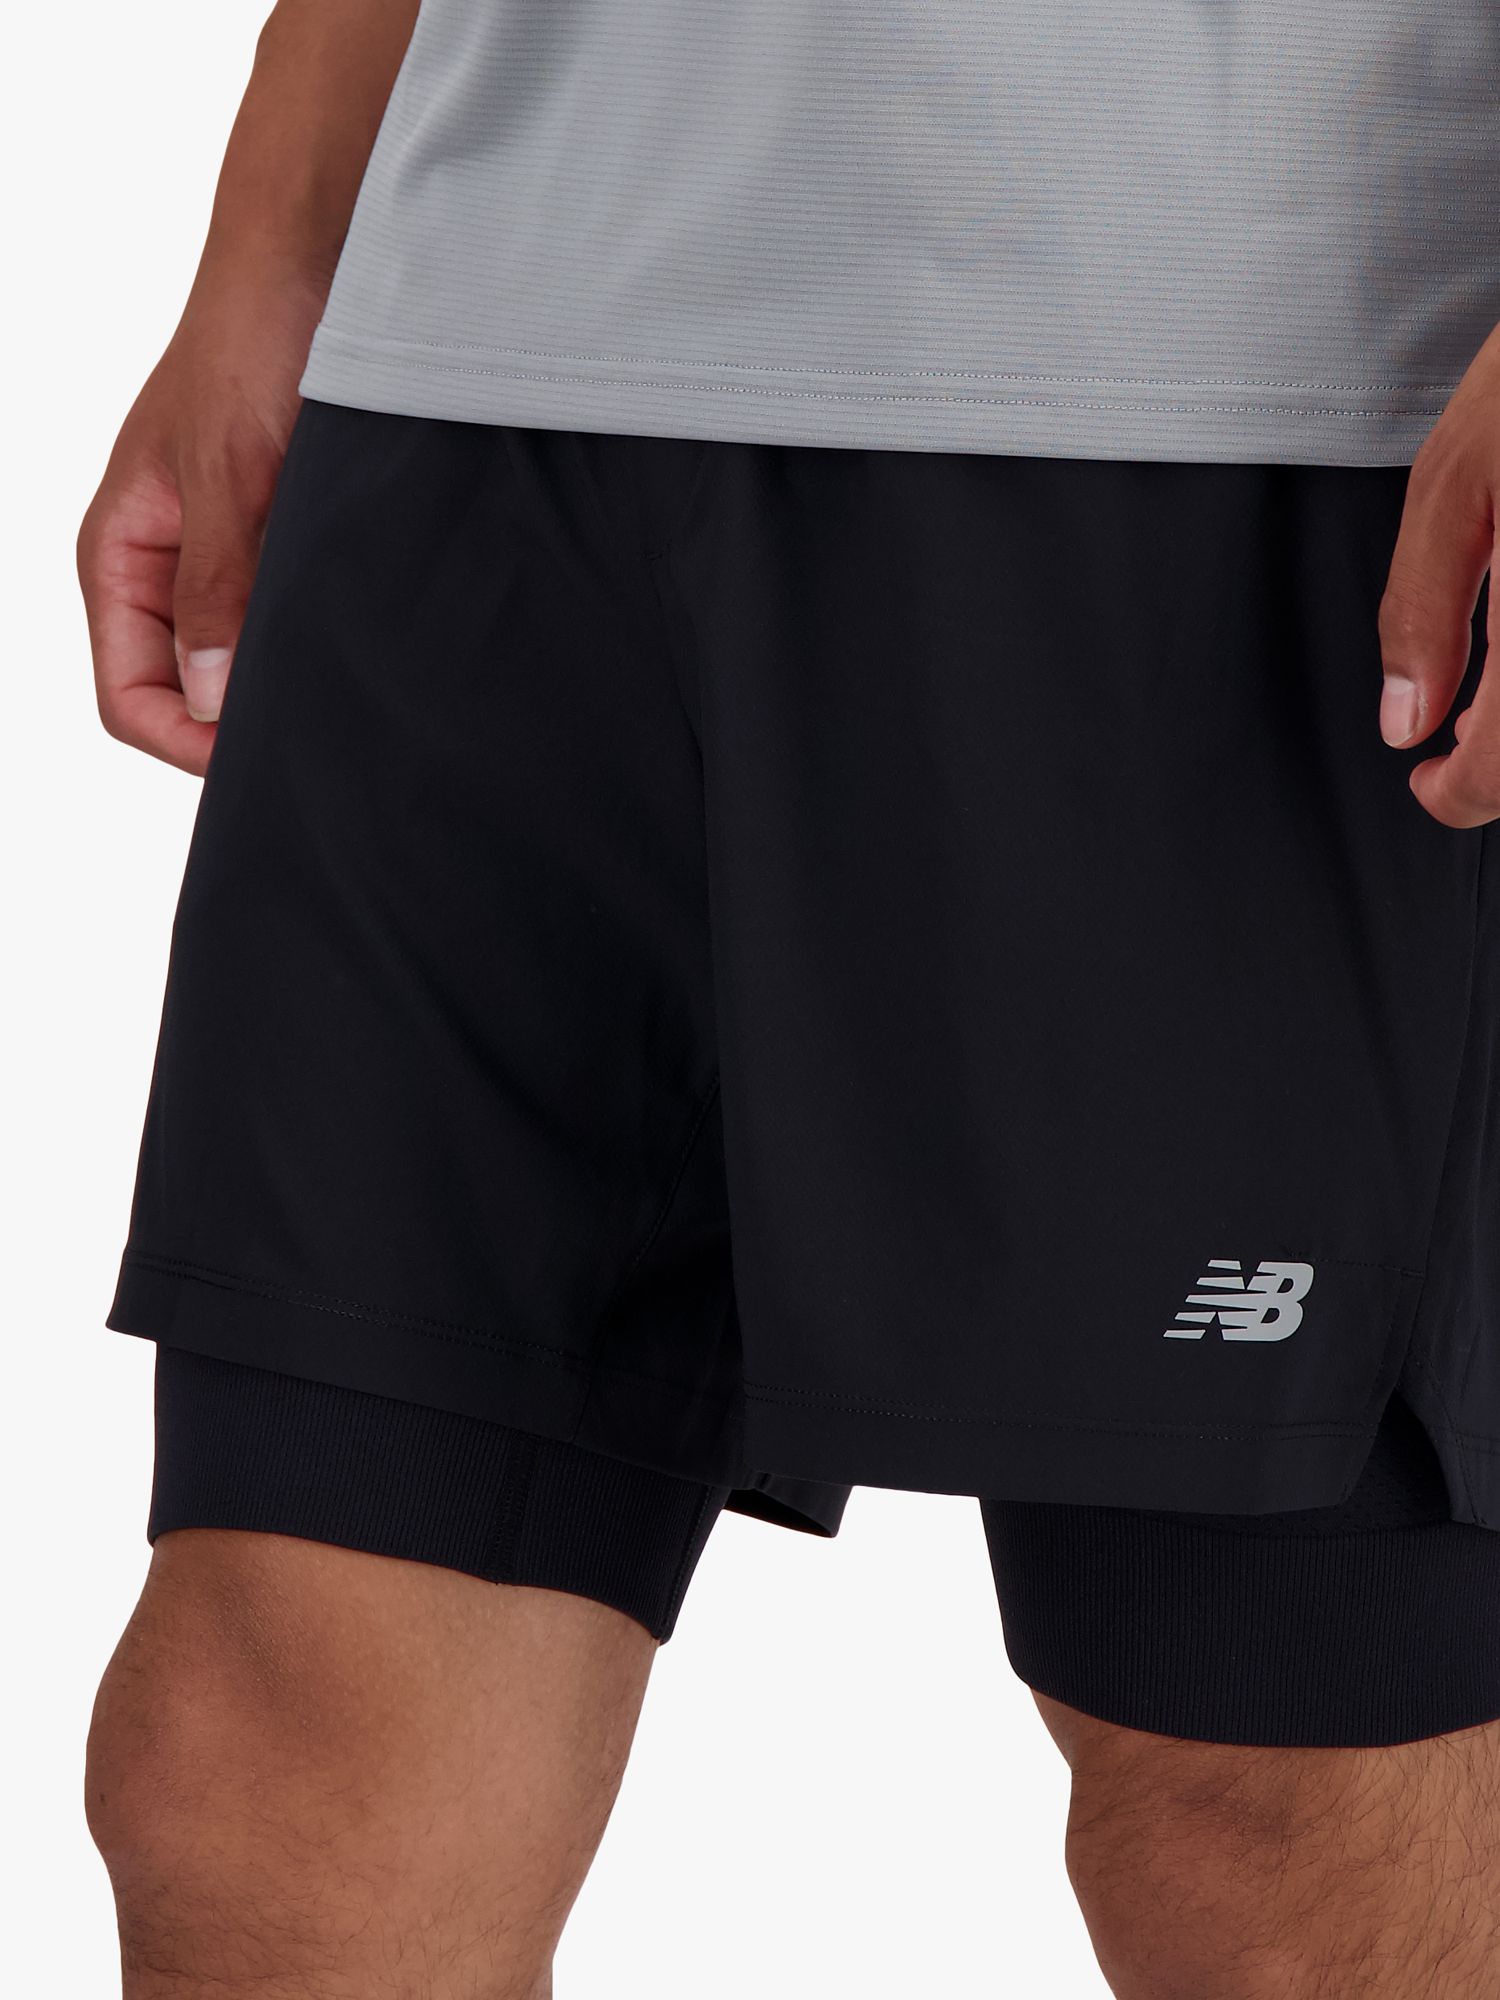 New Balance Seamless 2-in-1 Shorts, Black, XL